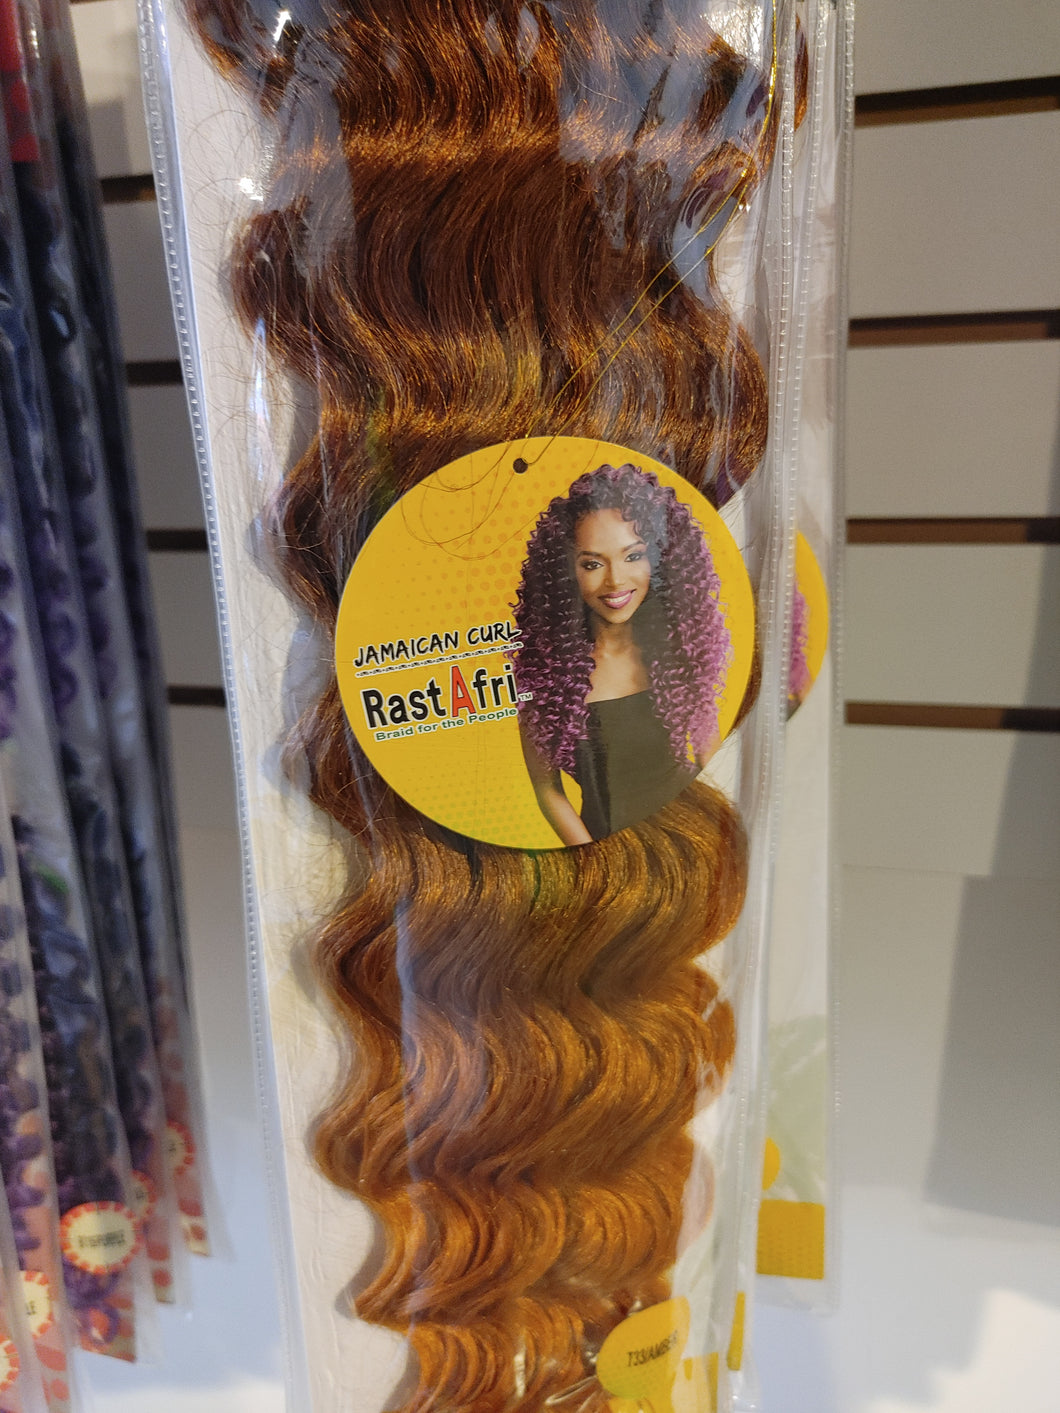 Rast A fri Jamaican Curl